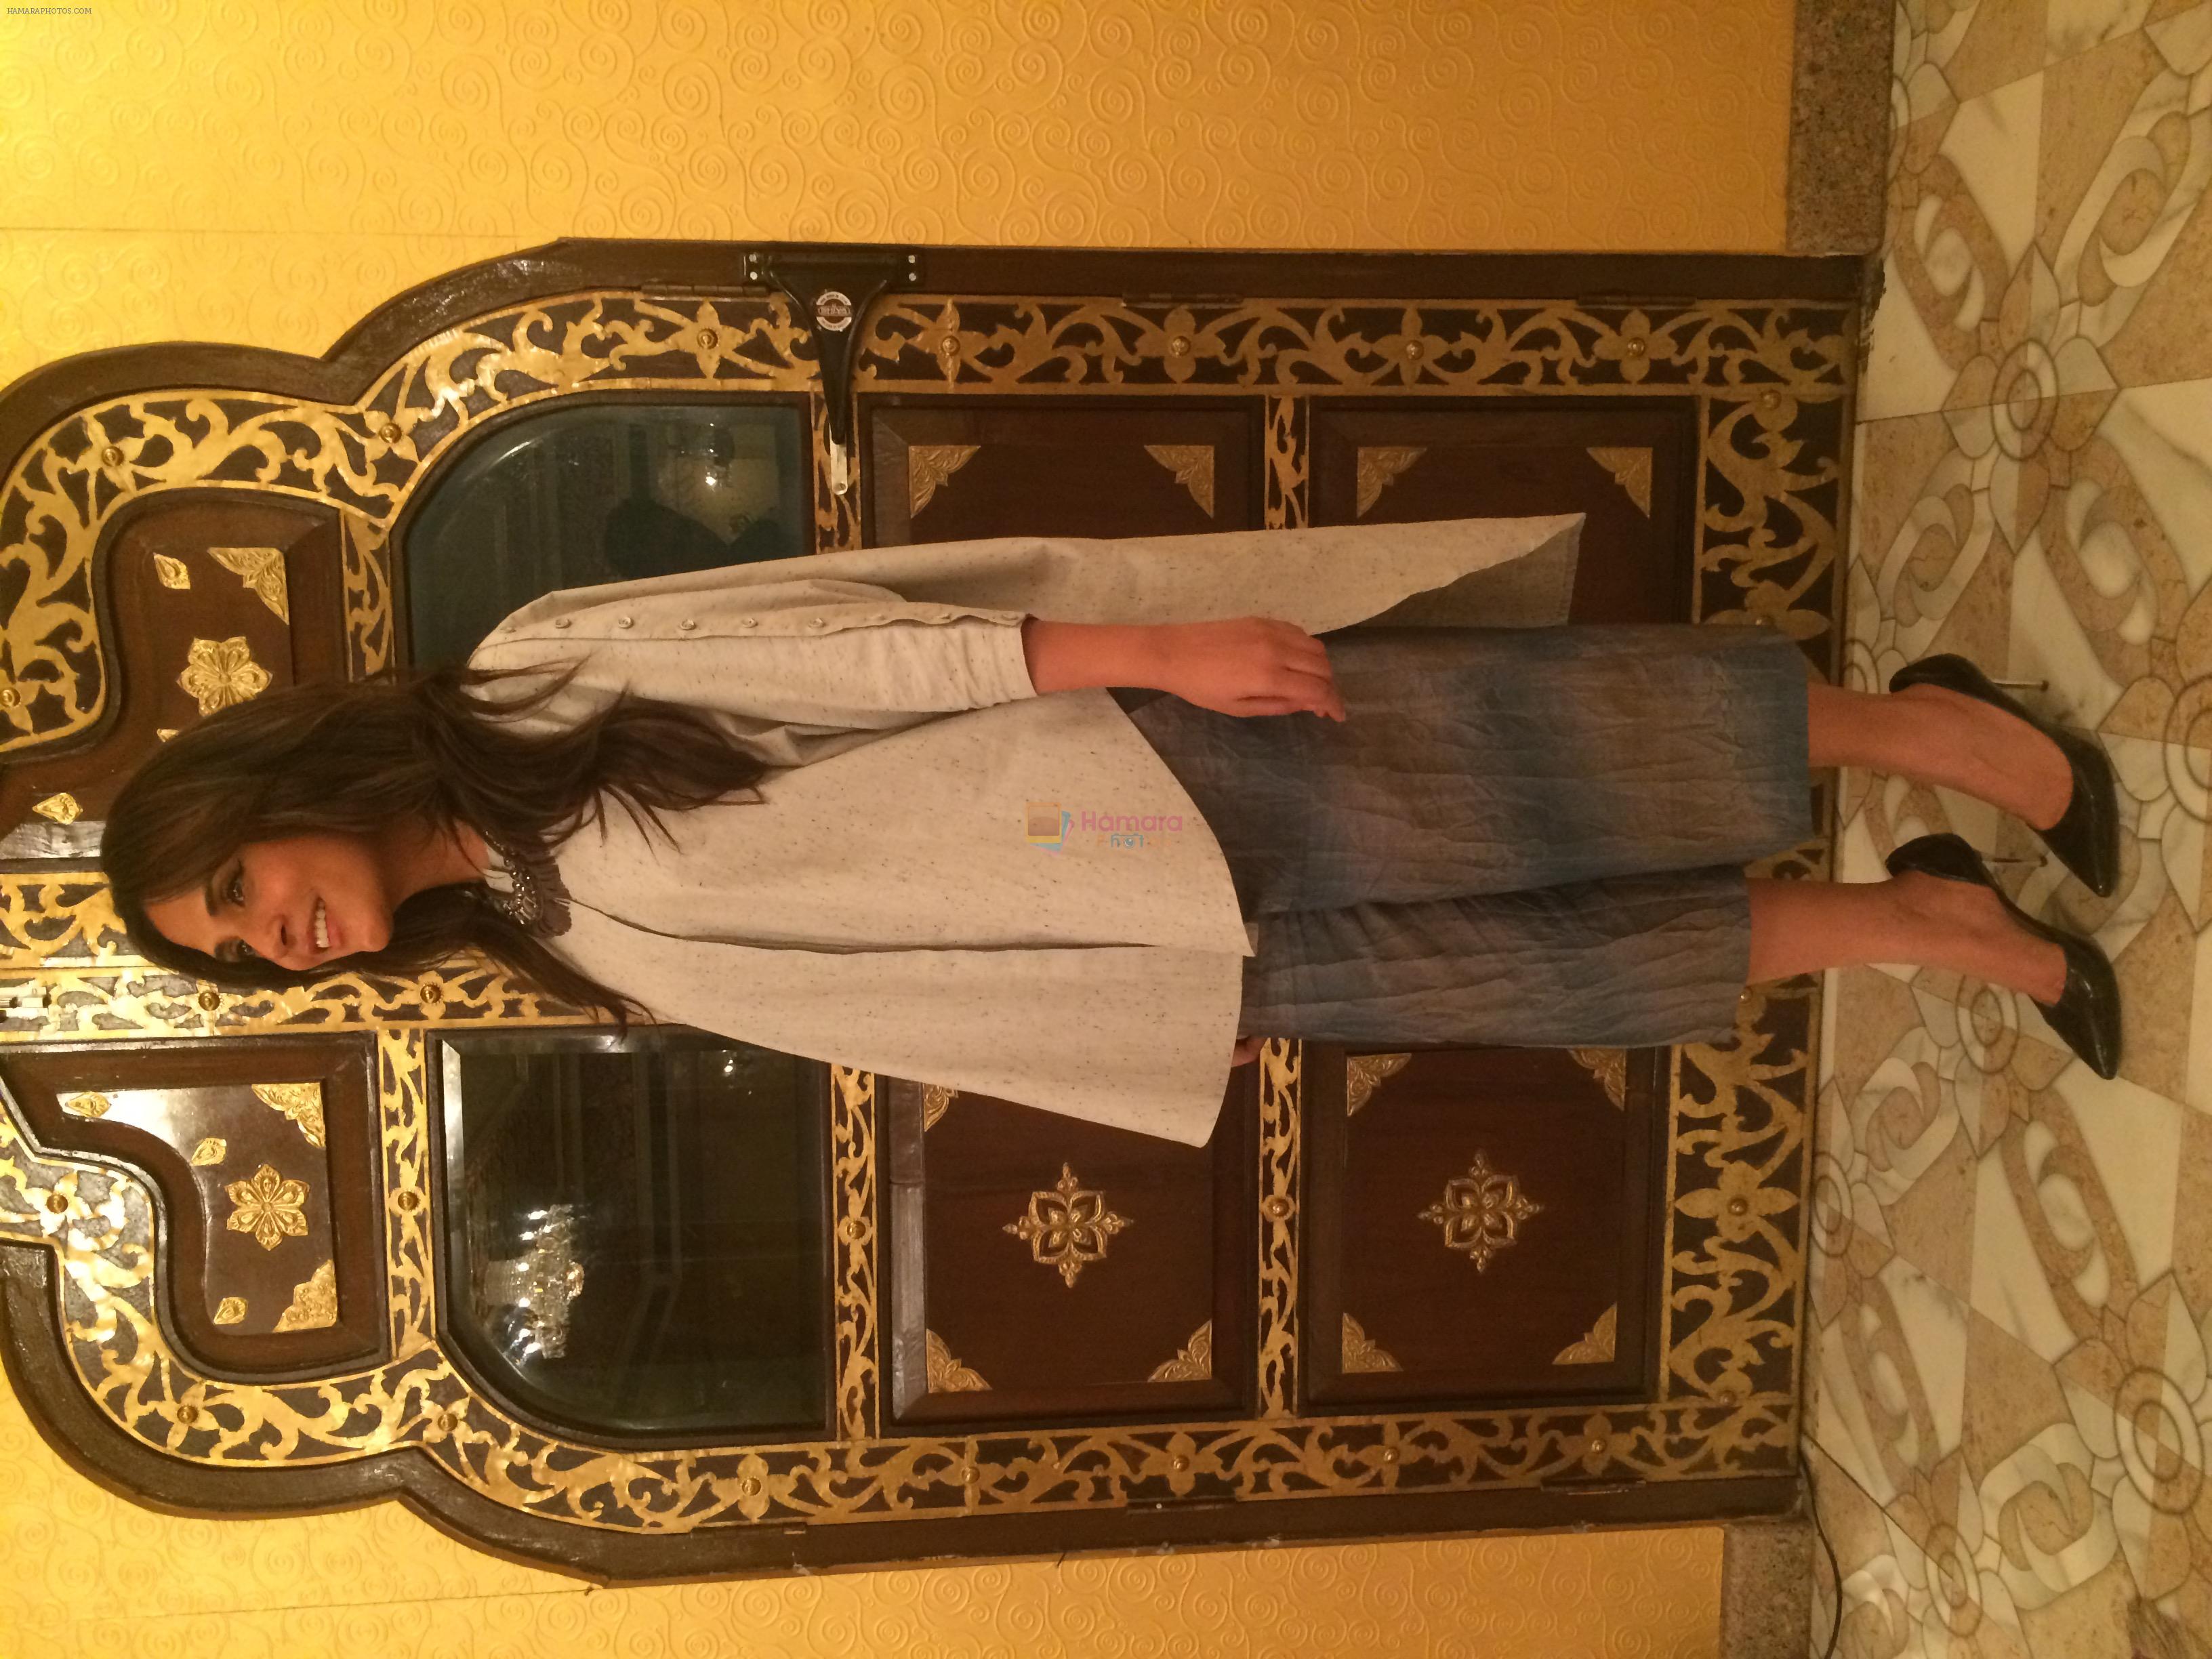 Richa chadda in jaipur on 16th July 2015